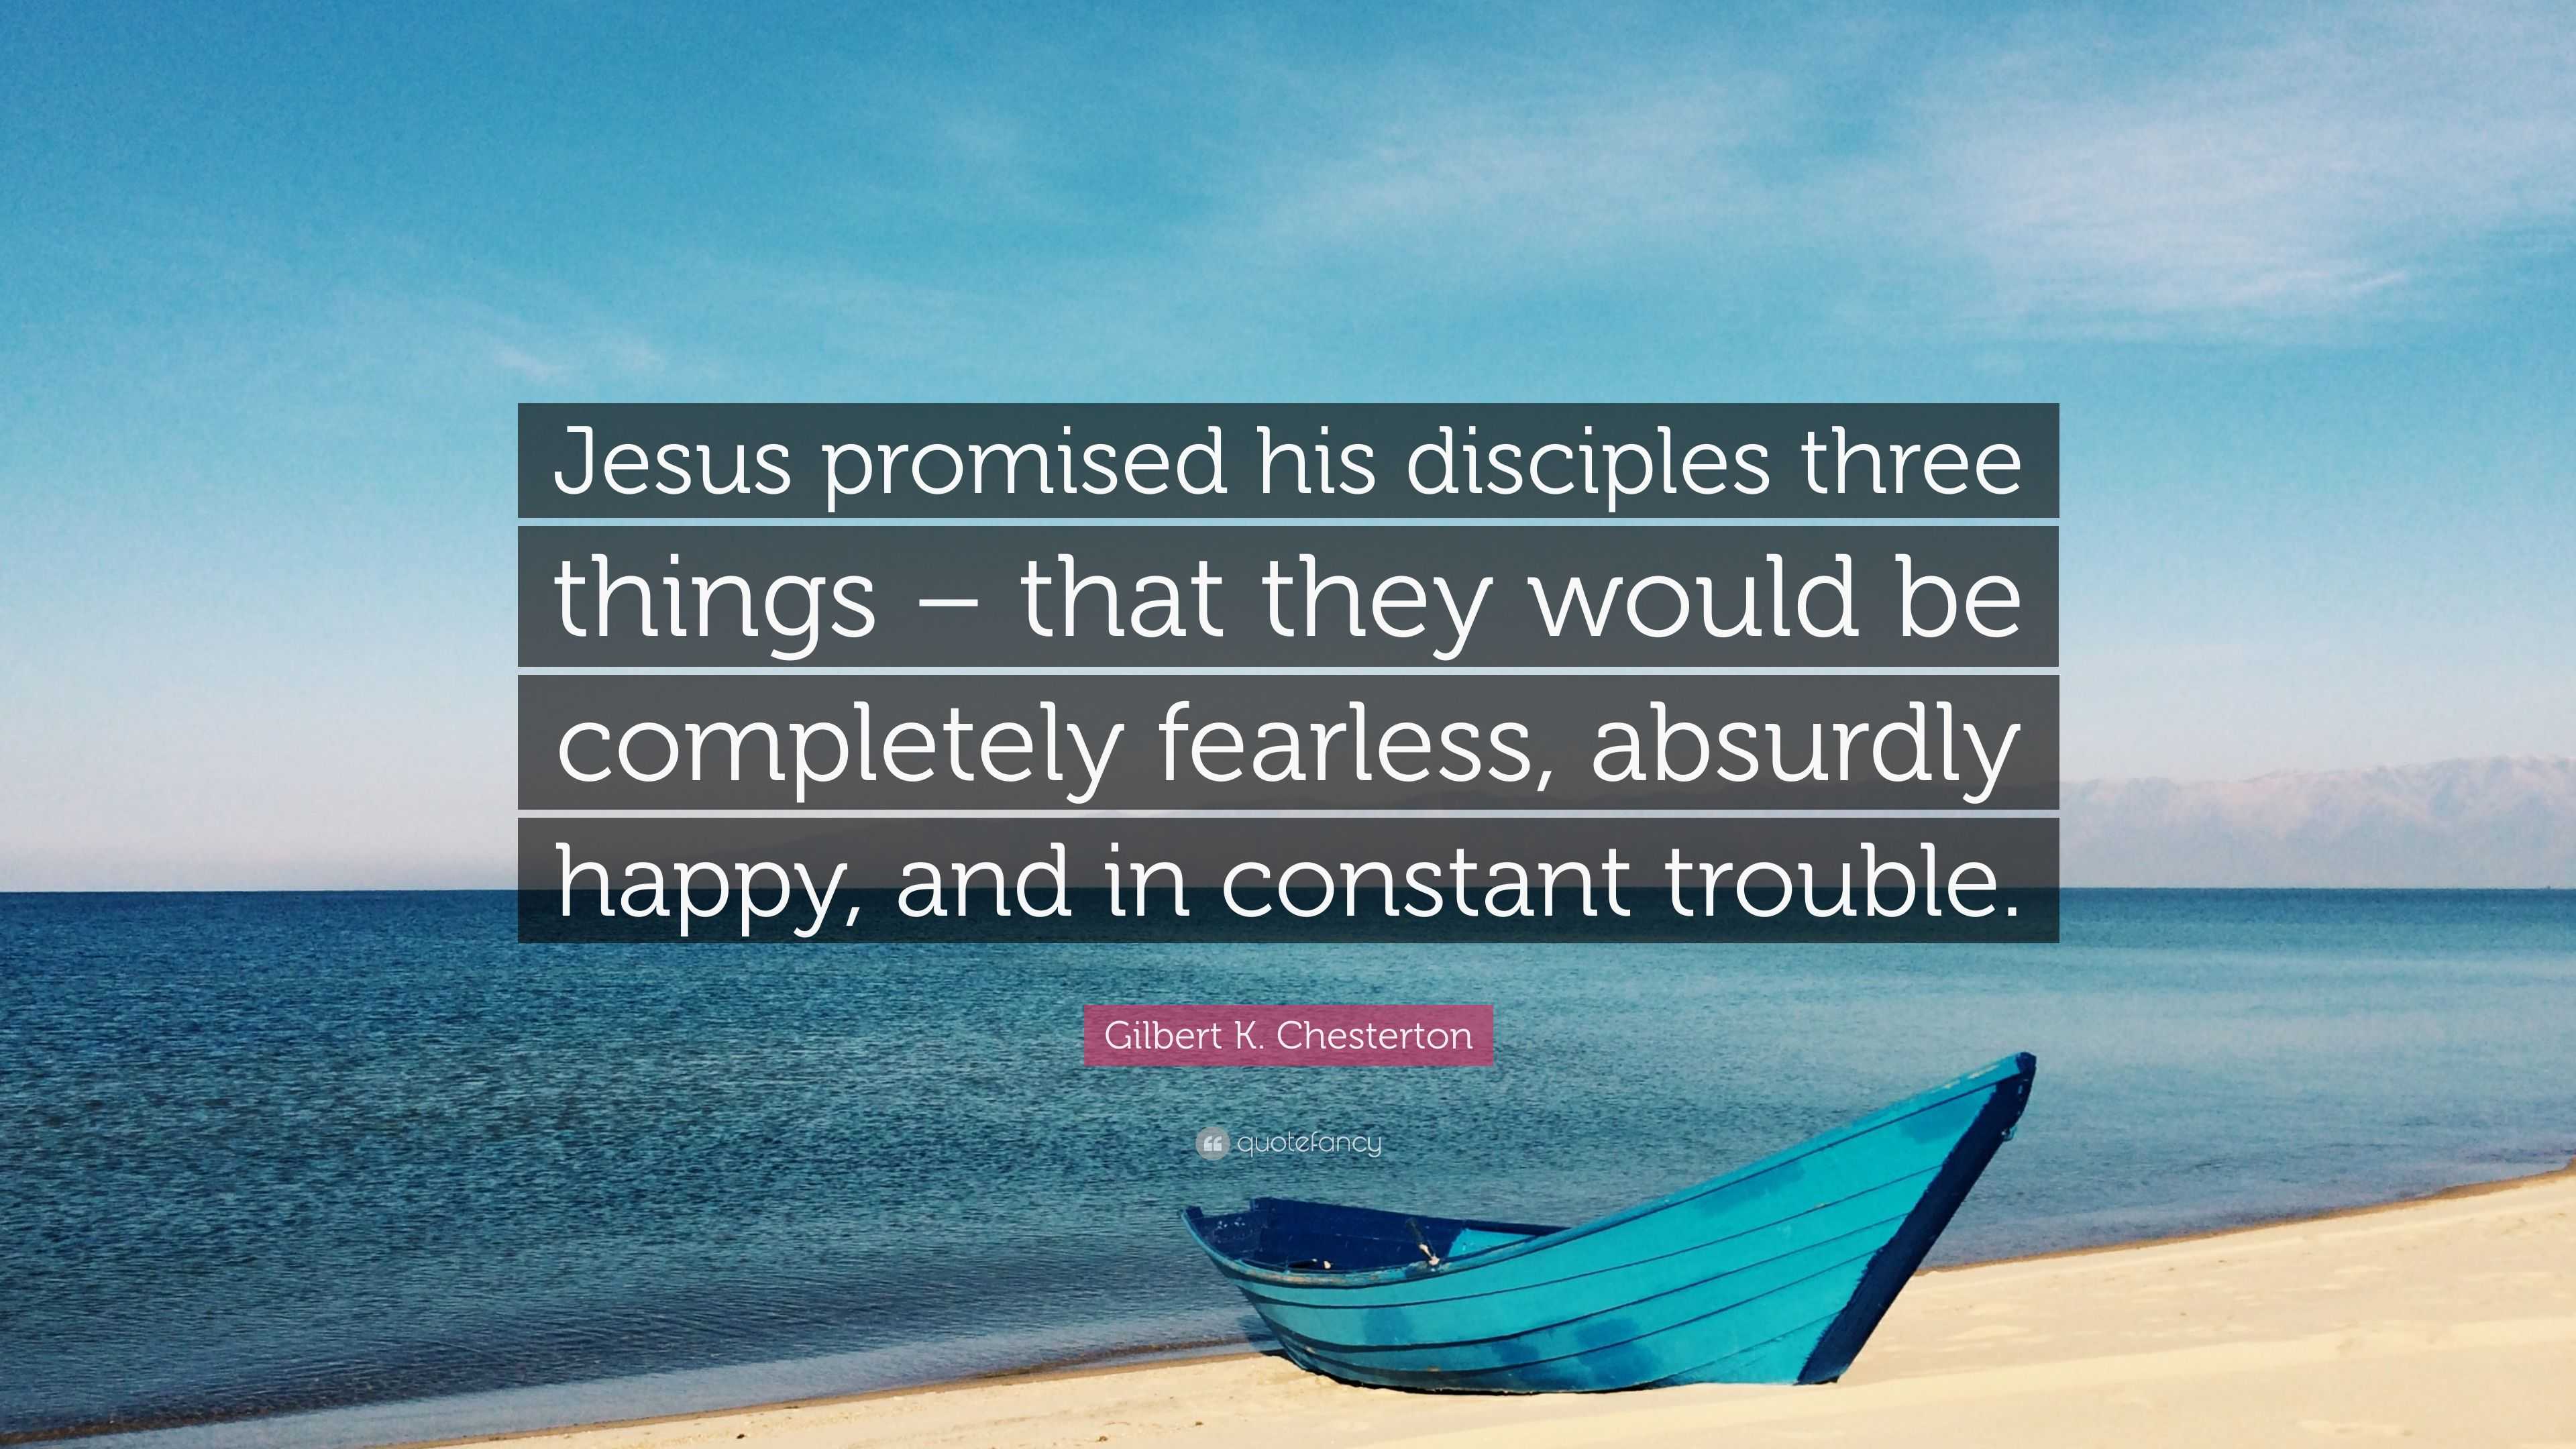 Gilbert K. Chesterton Quote: "Jesus promised his disciples ...